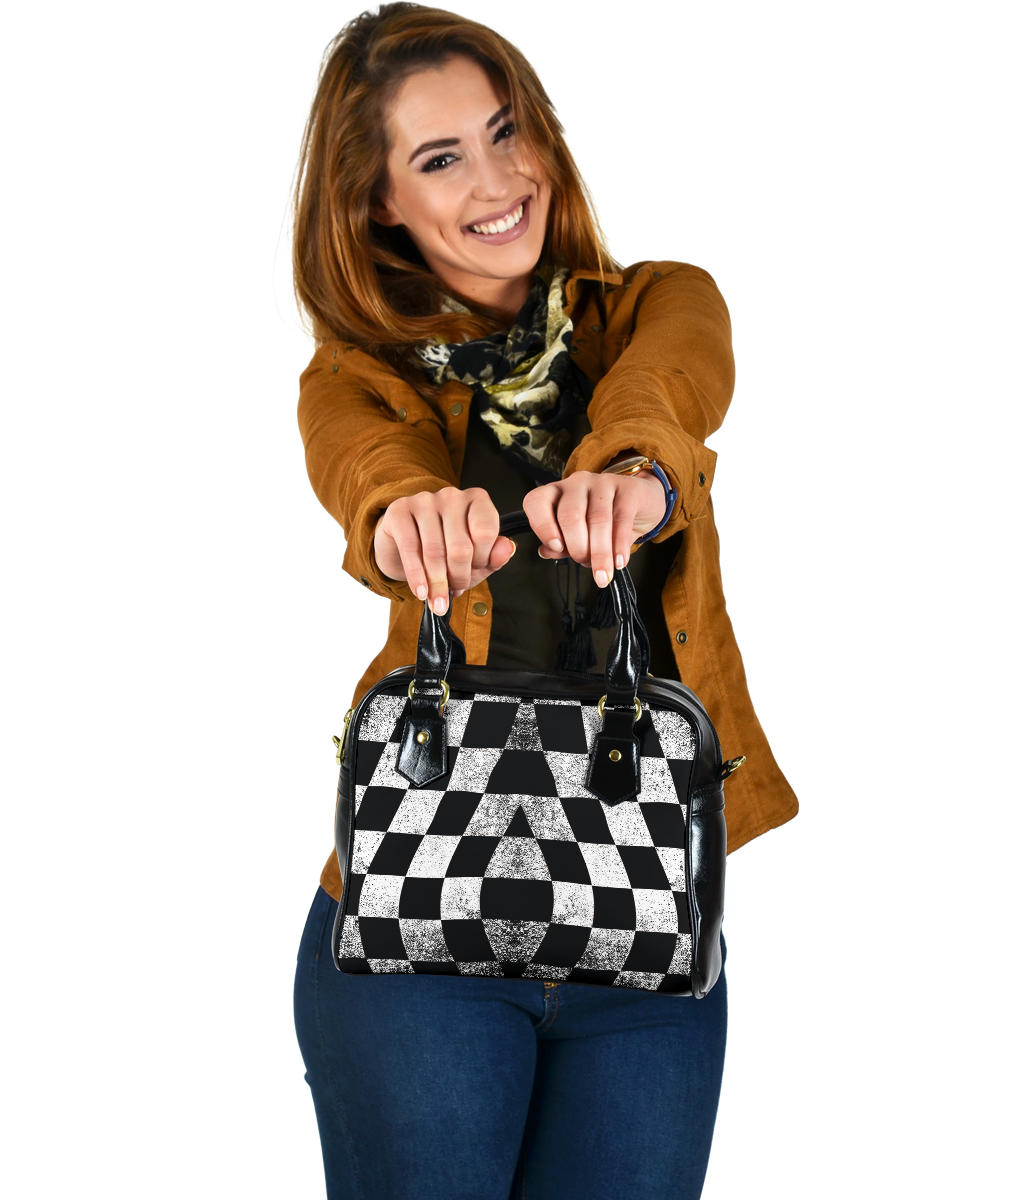 Racing Dirty Checkered purse